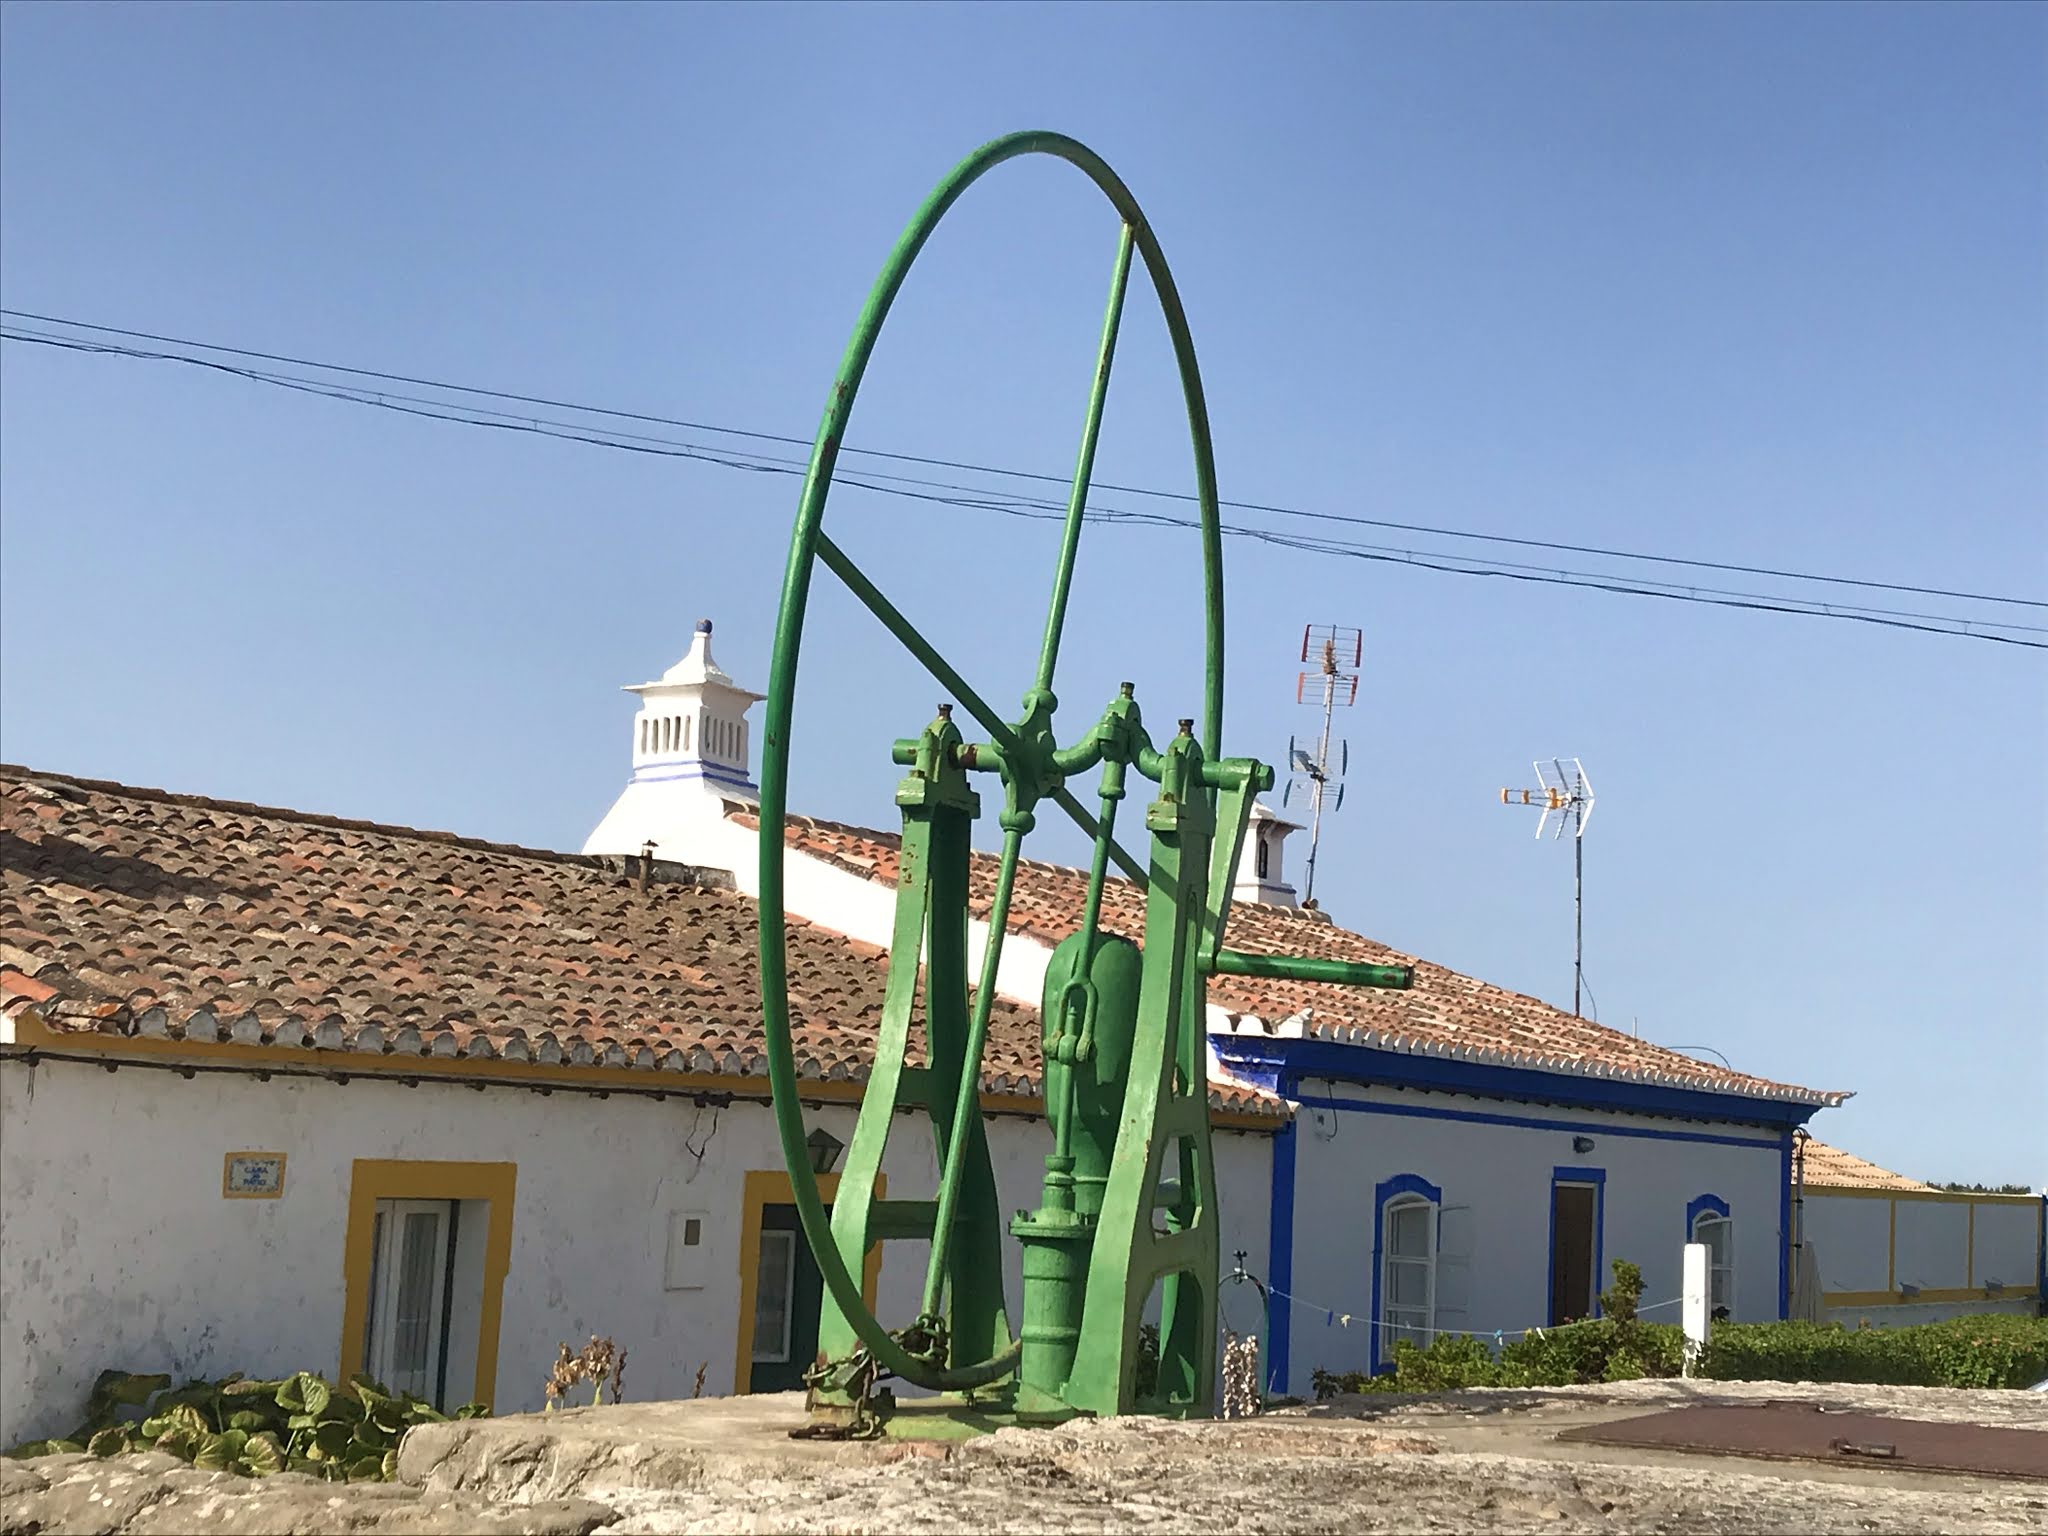 Cacela Velha, Algarve, Portugal